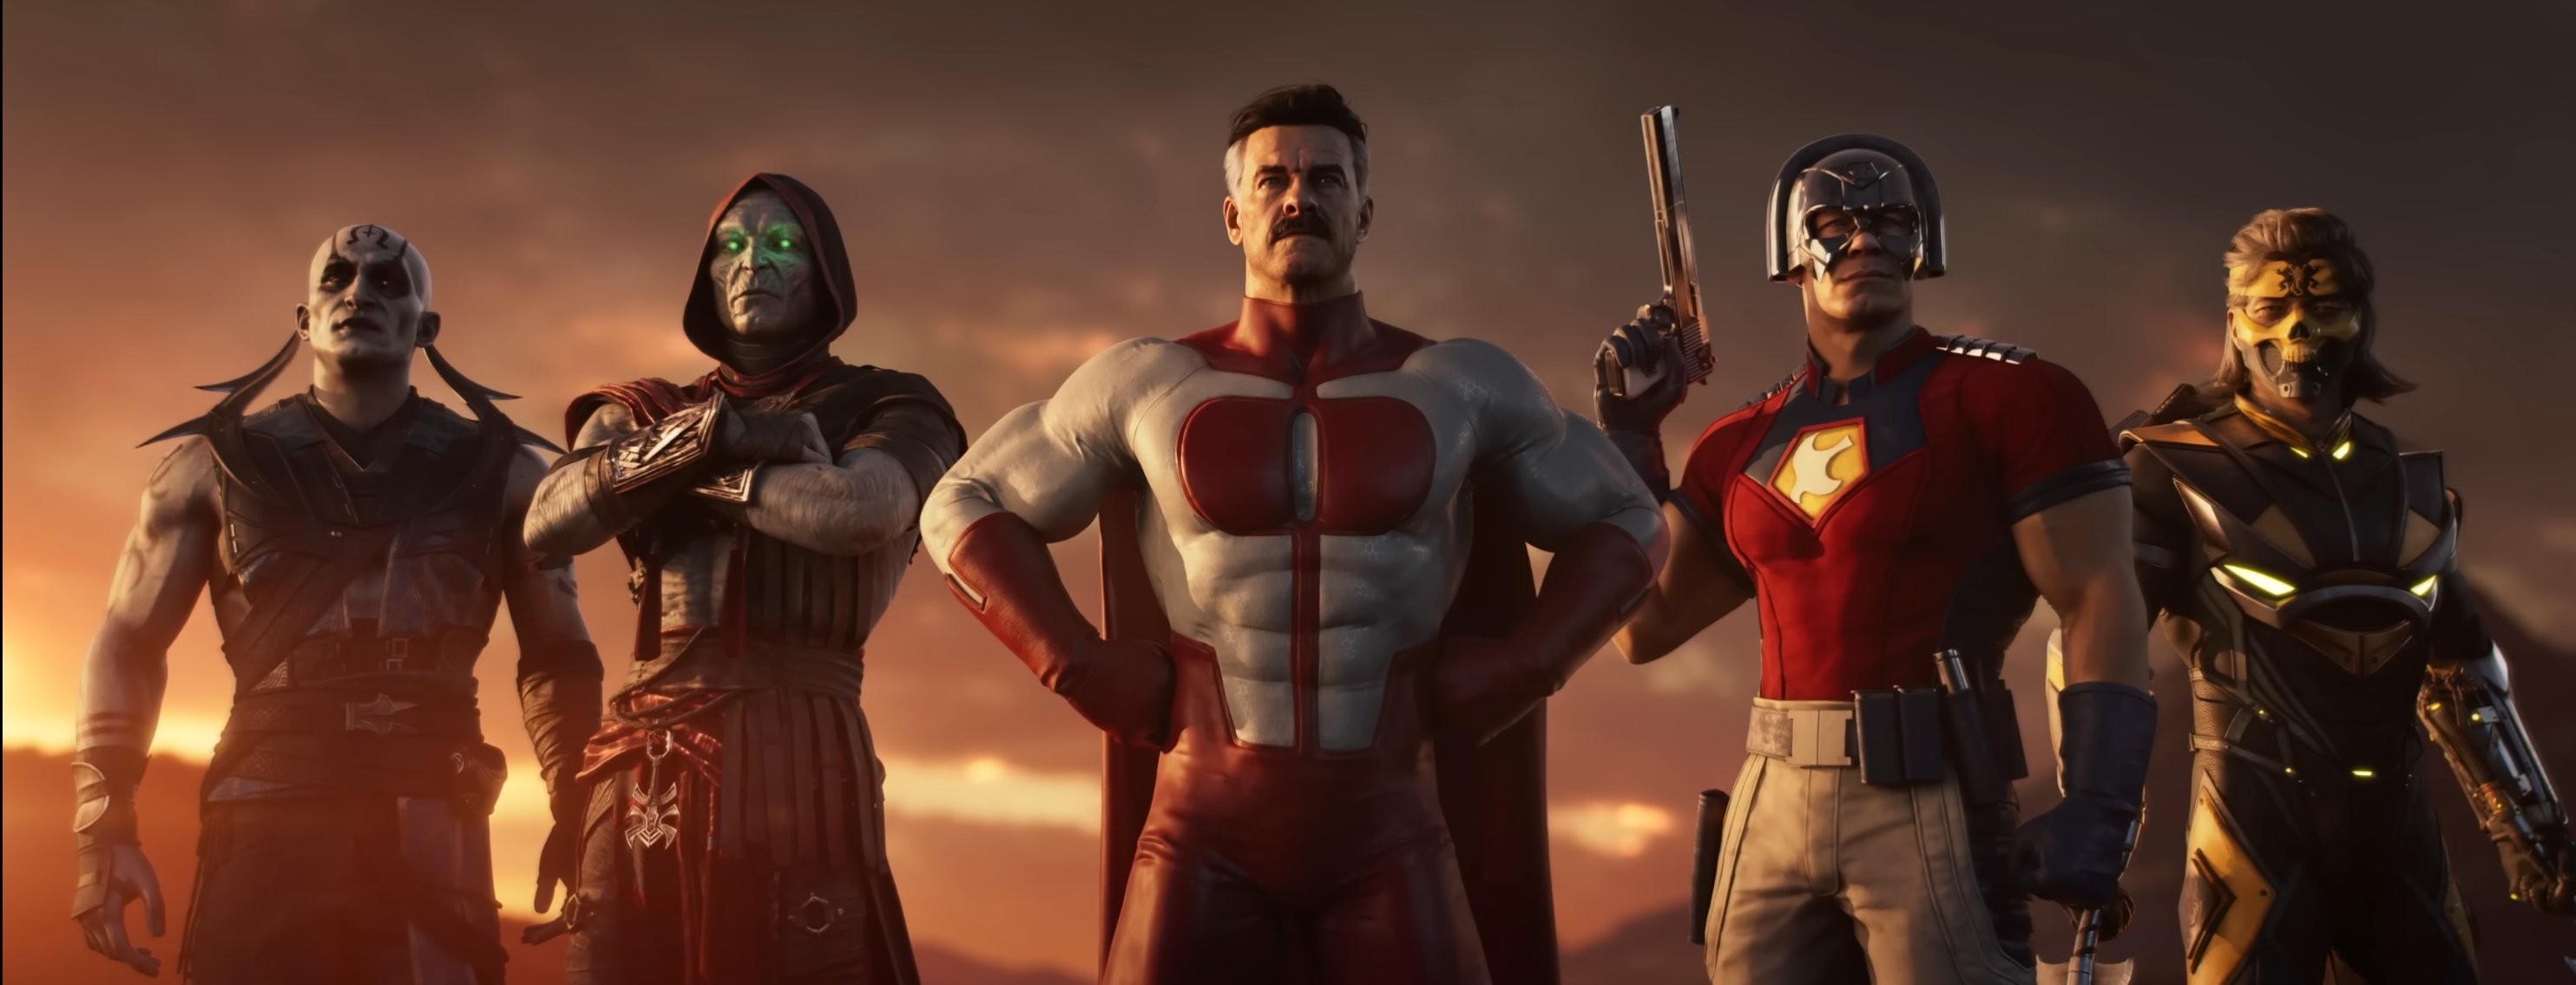 Mortal Kombat 1 - Official Kombat Pack Roster Reveal Trailer 